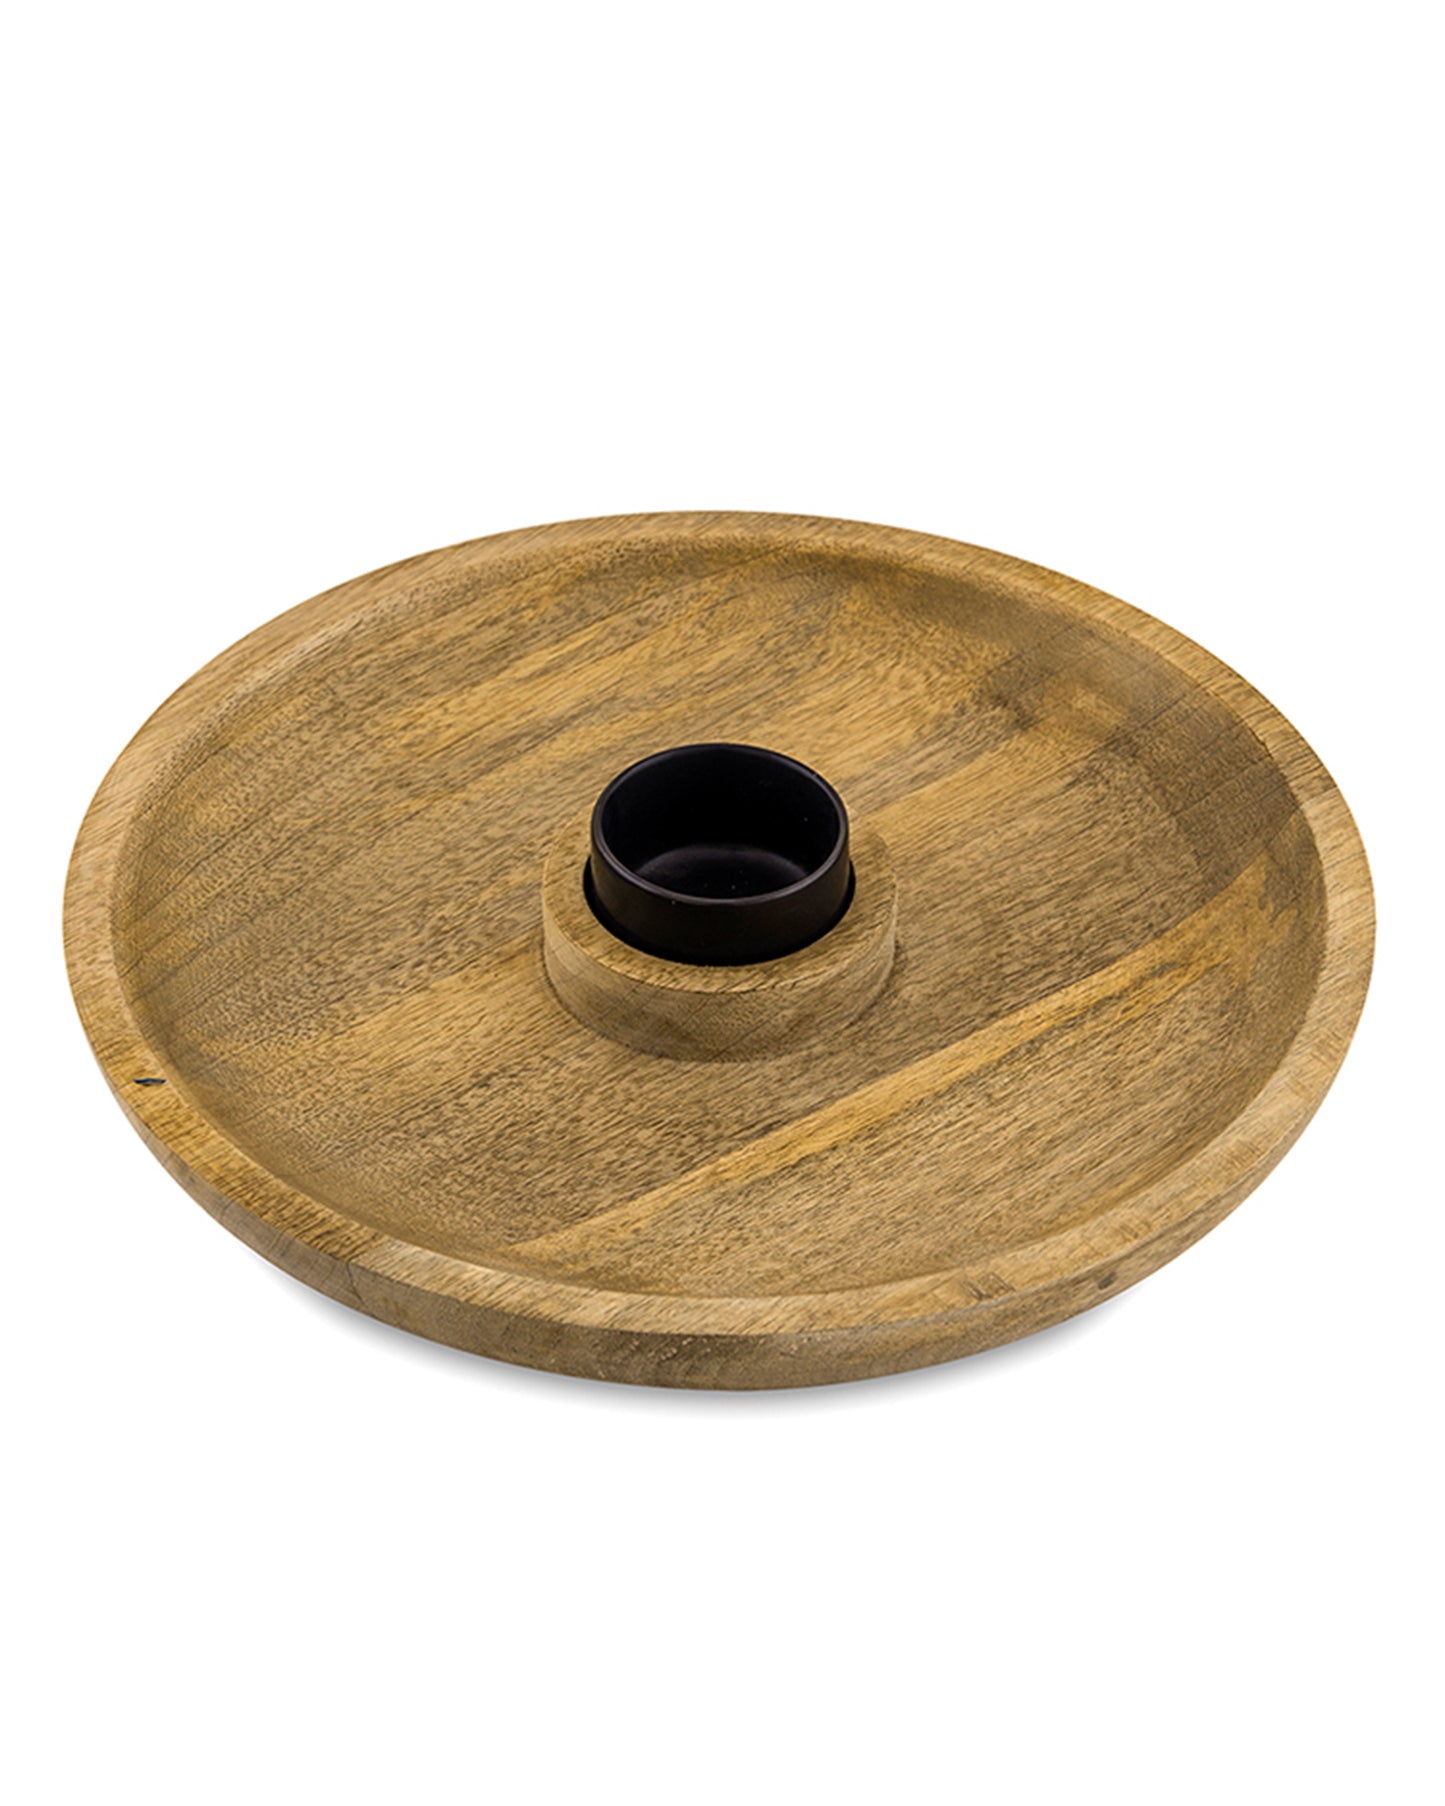 Wood Chip-n-Dip Serving Tray with Dip Bowl Large